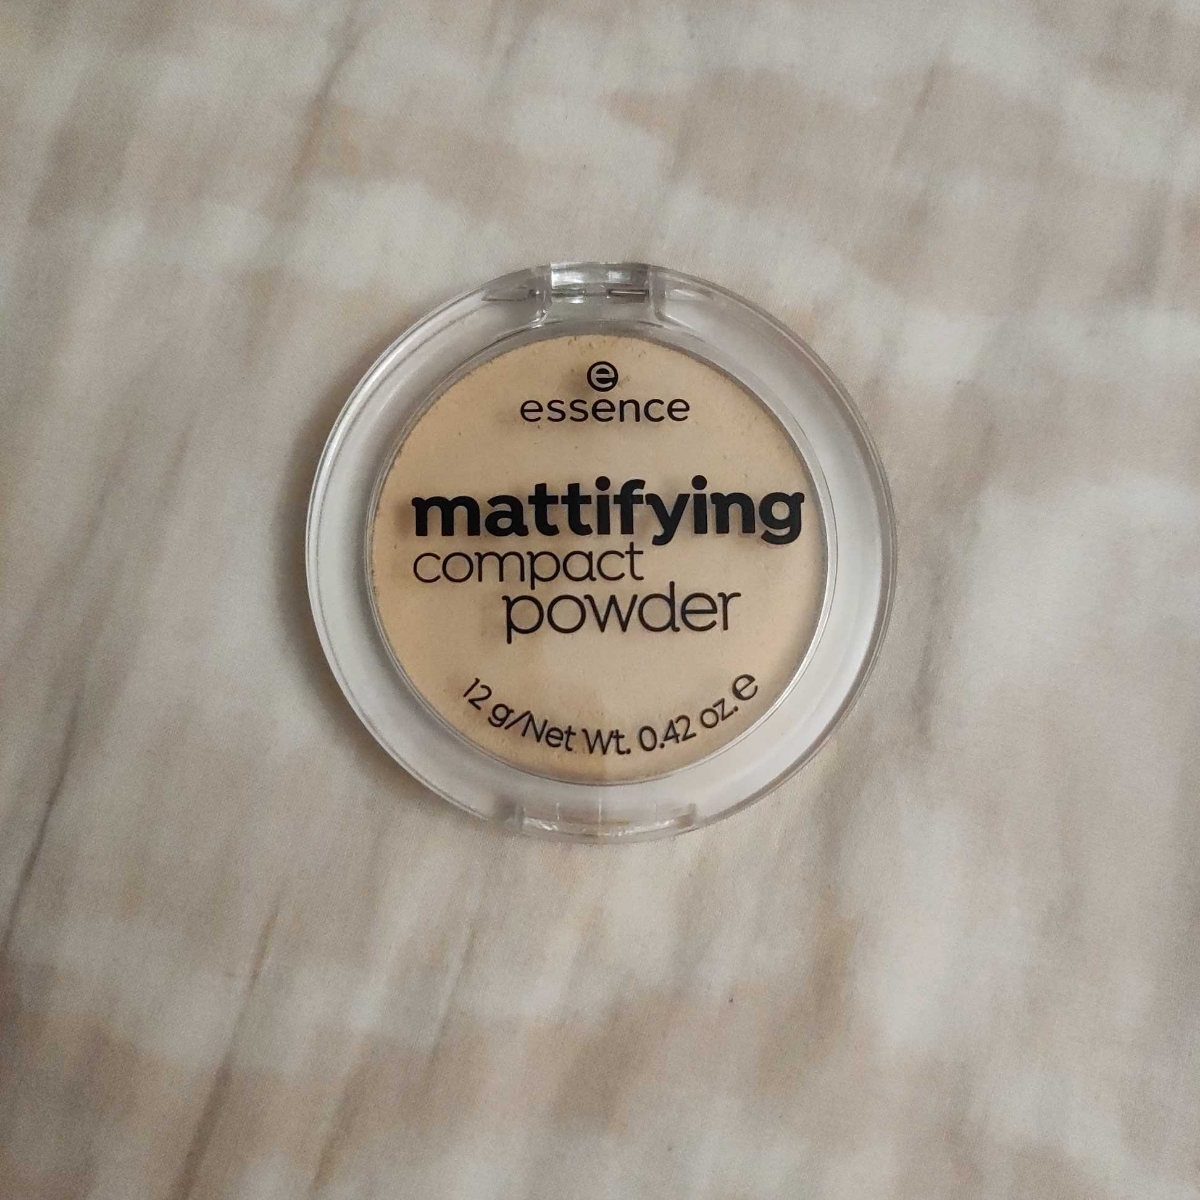 Essence Mattifying Compact Powder Review | abillion